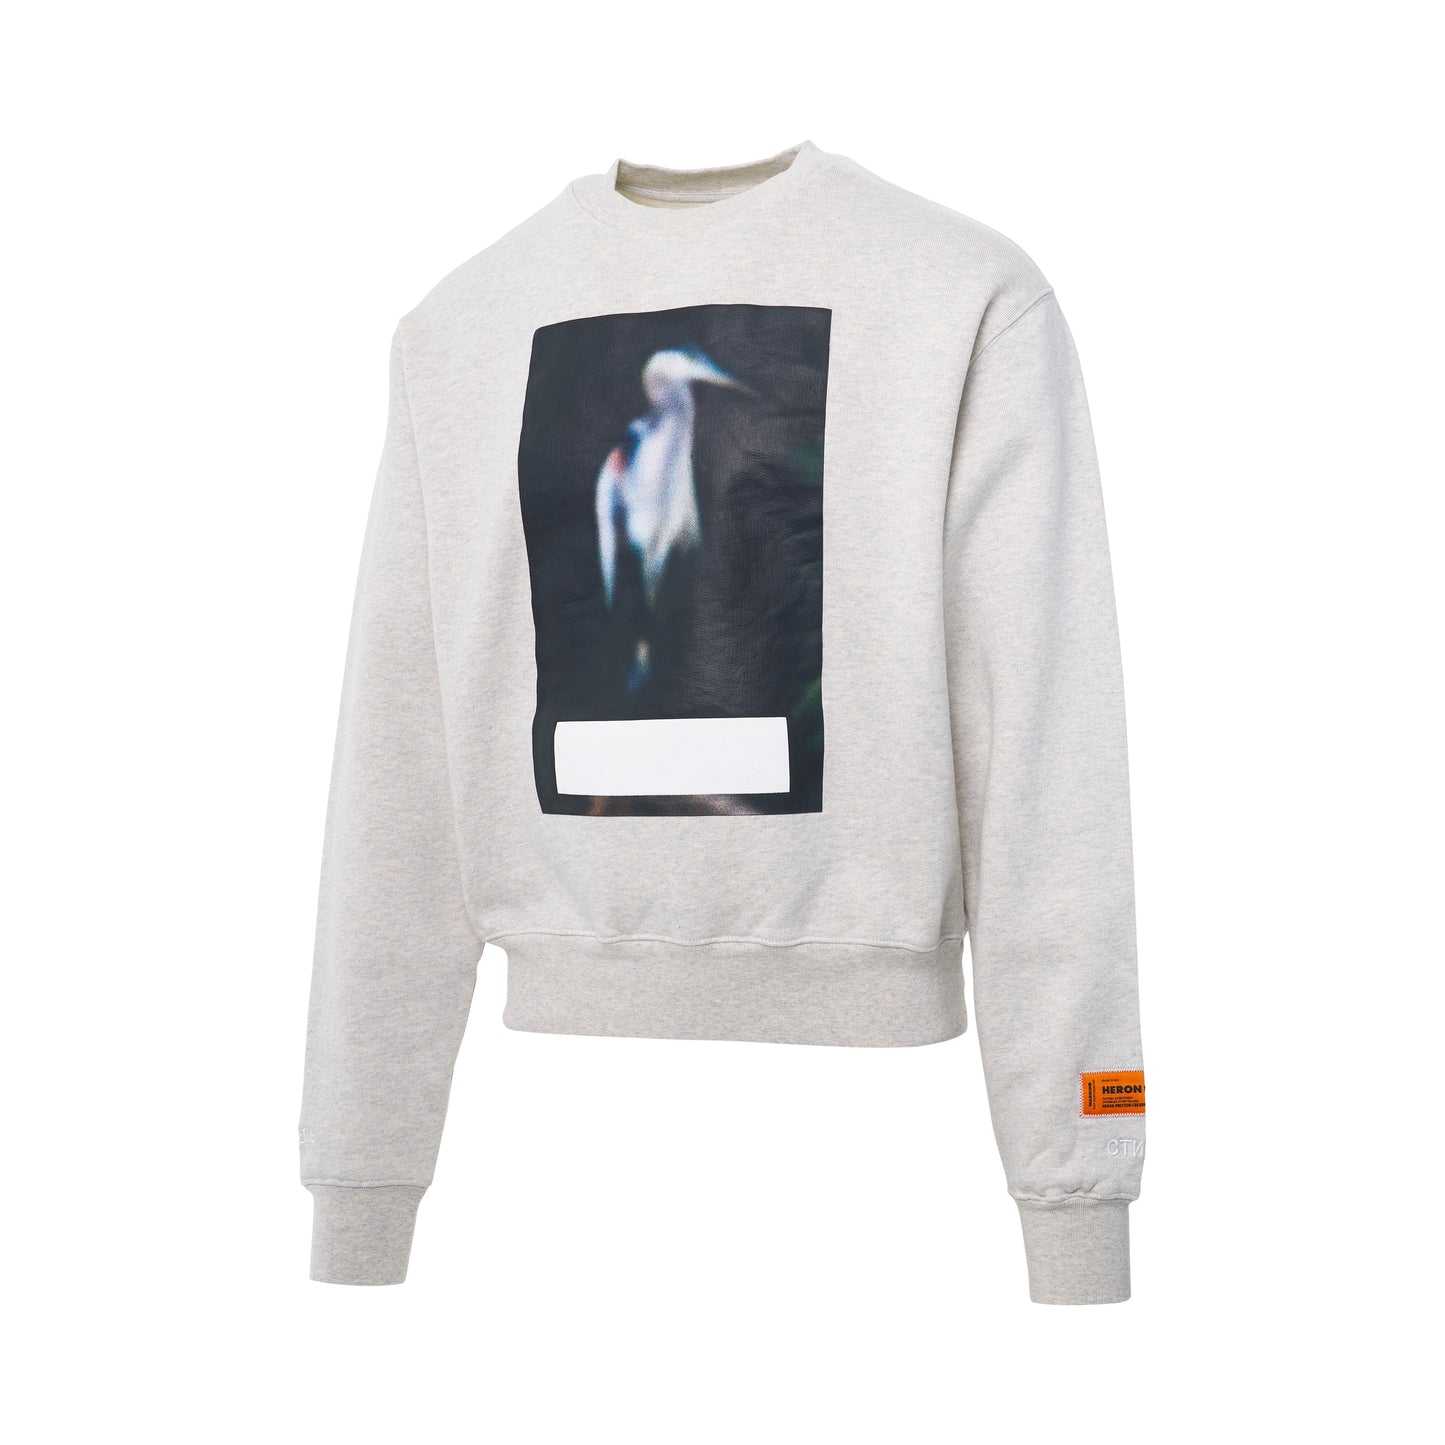 Censored Heron Sweatshirt in Grey